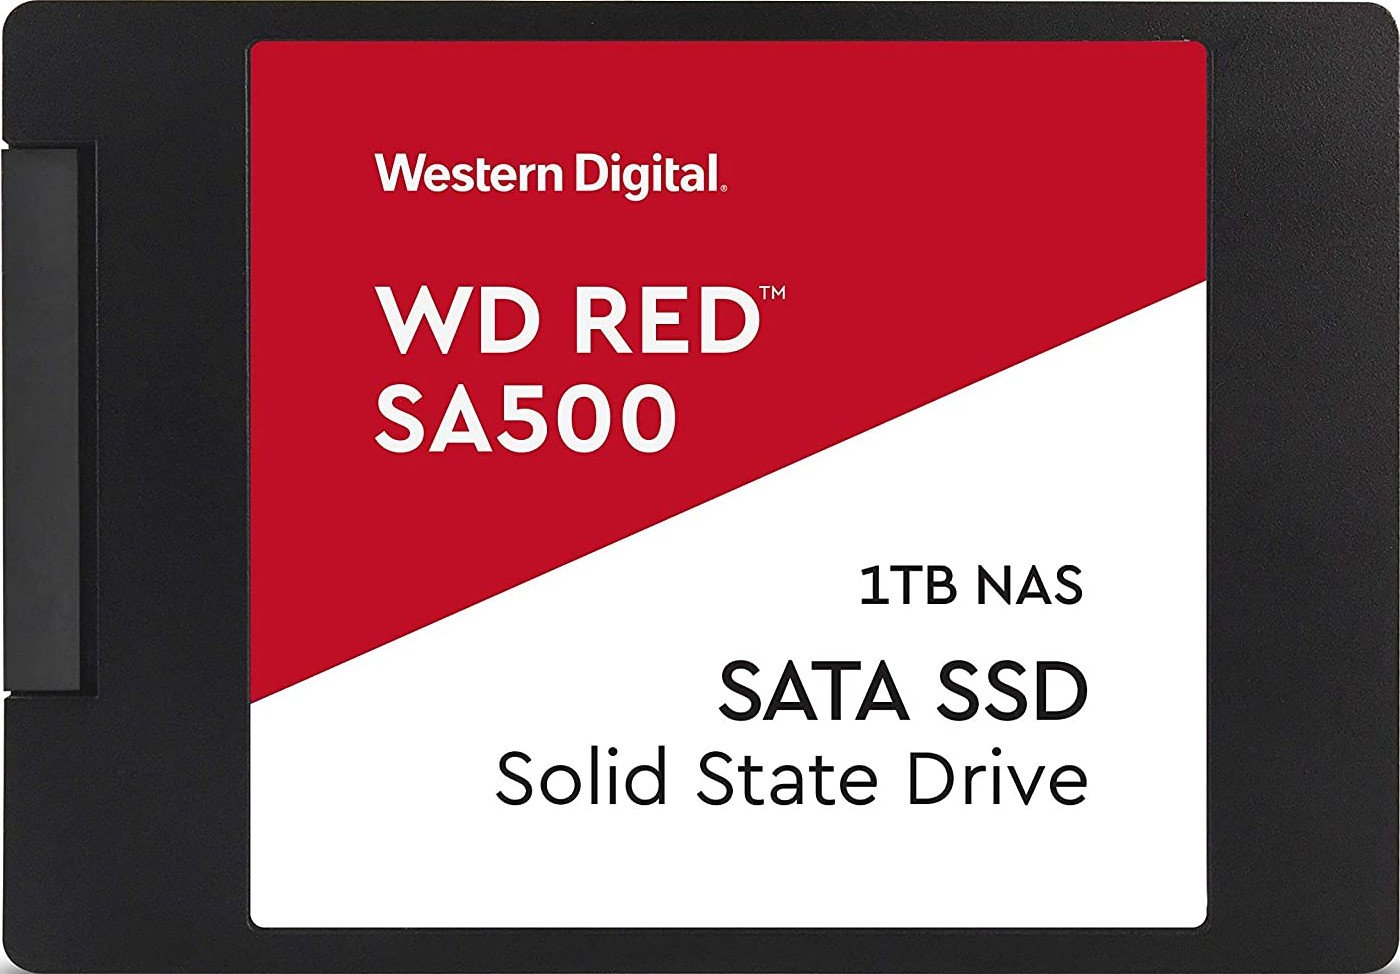 Western Digital RED SA500 SSD